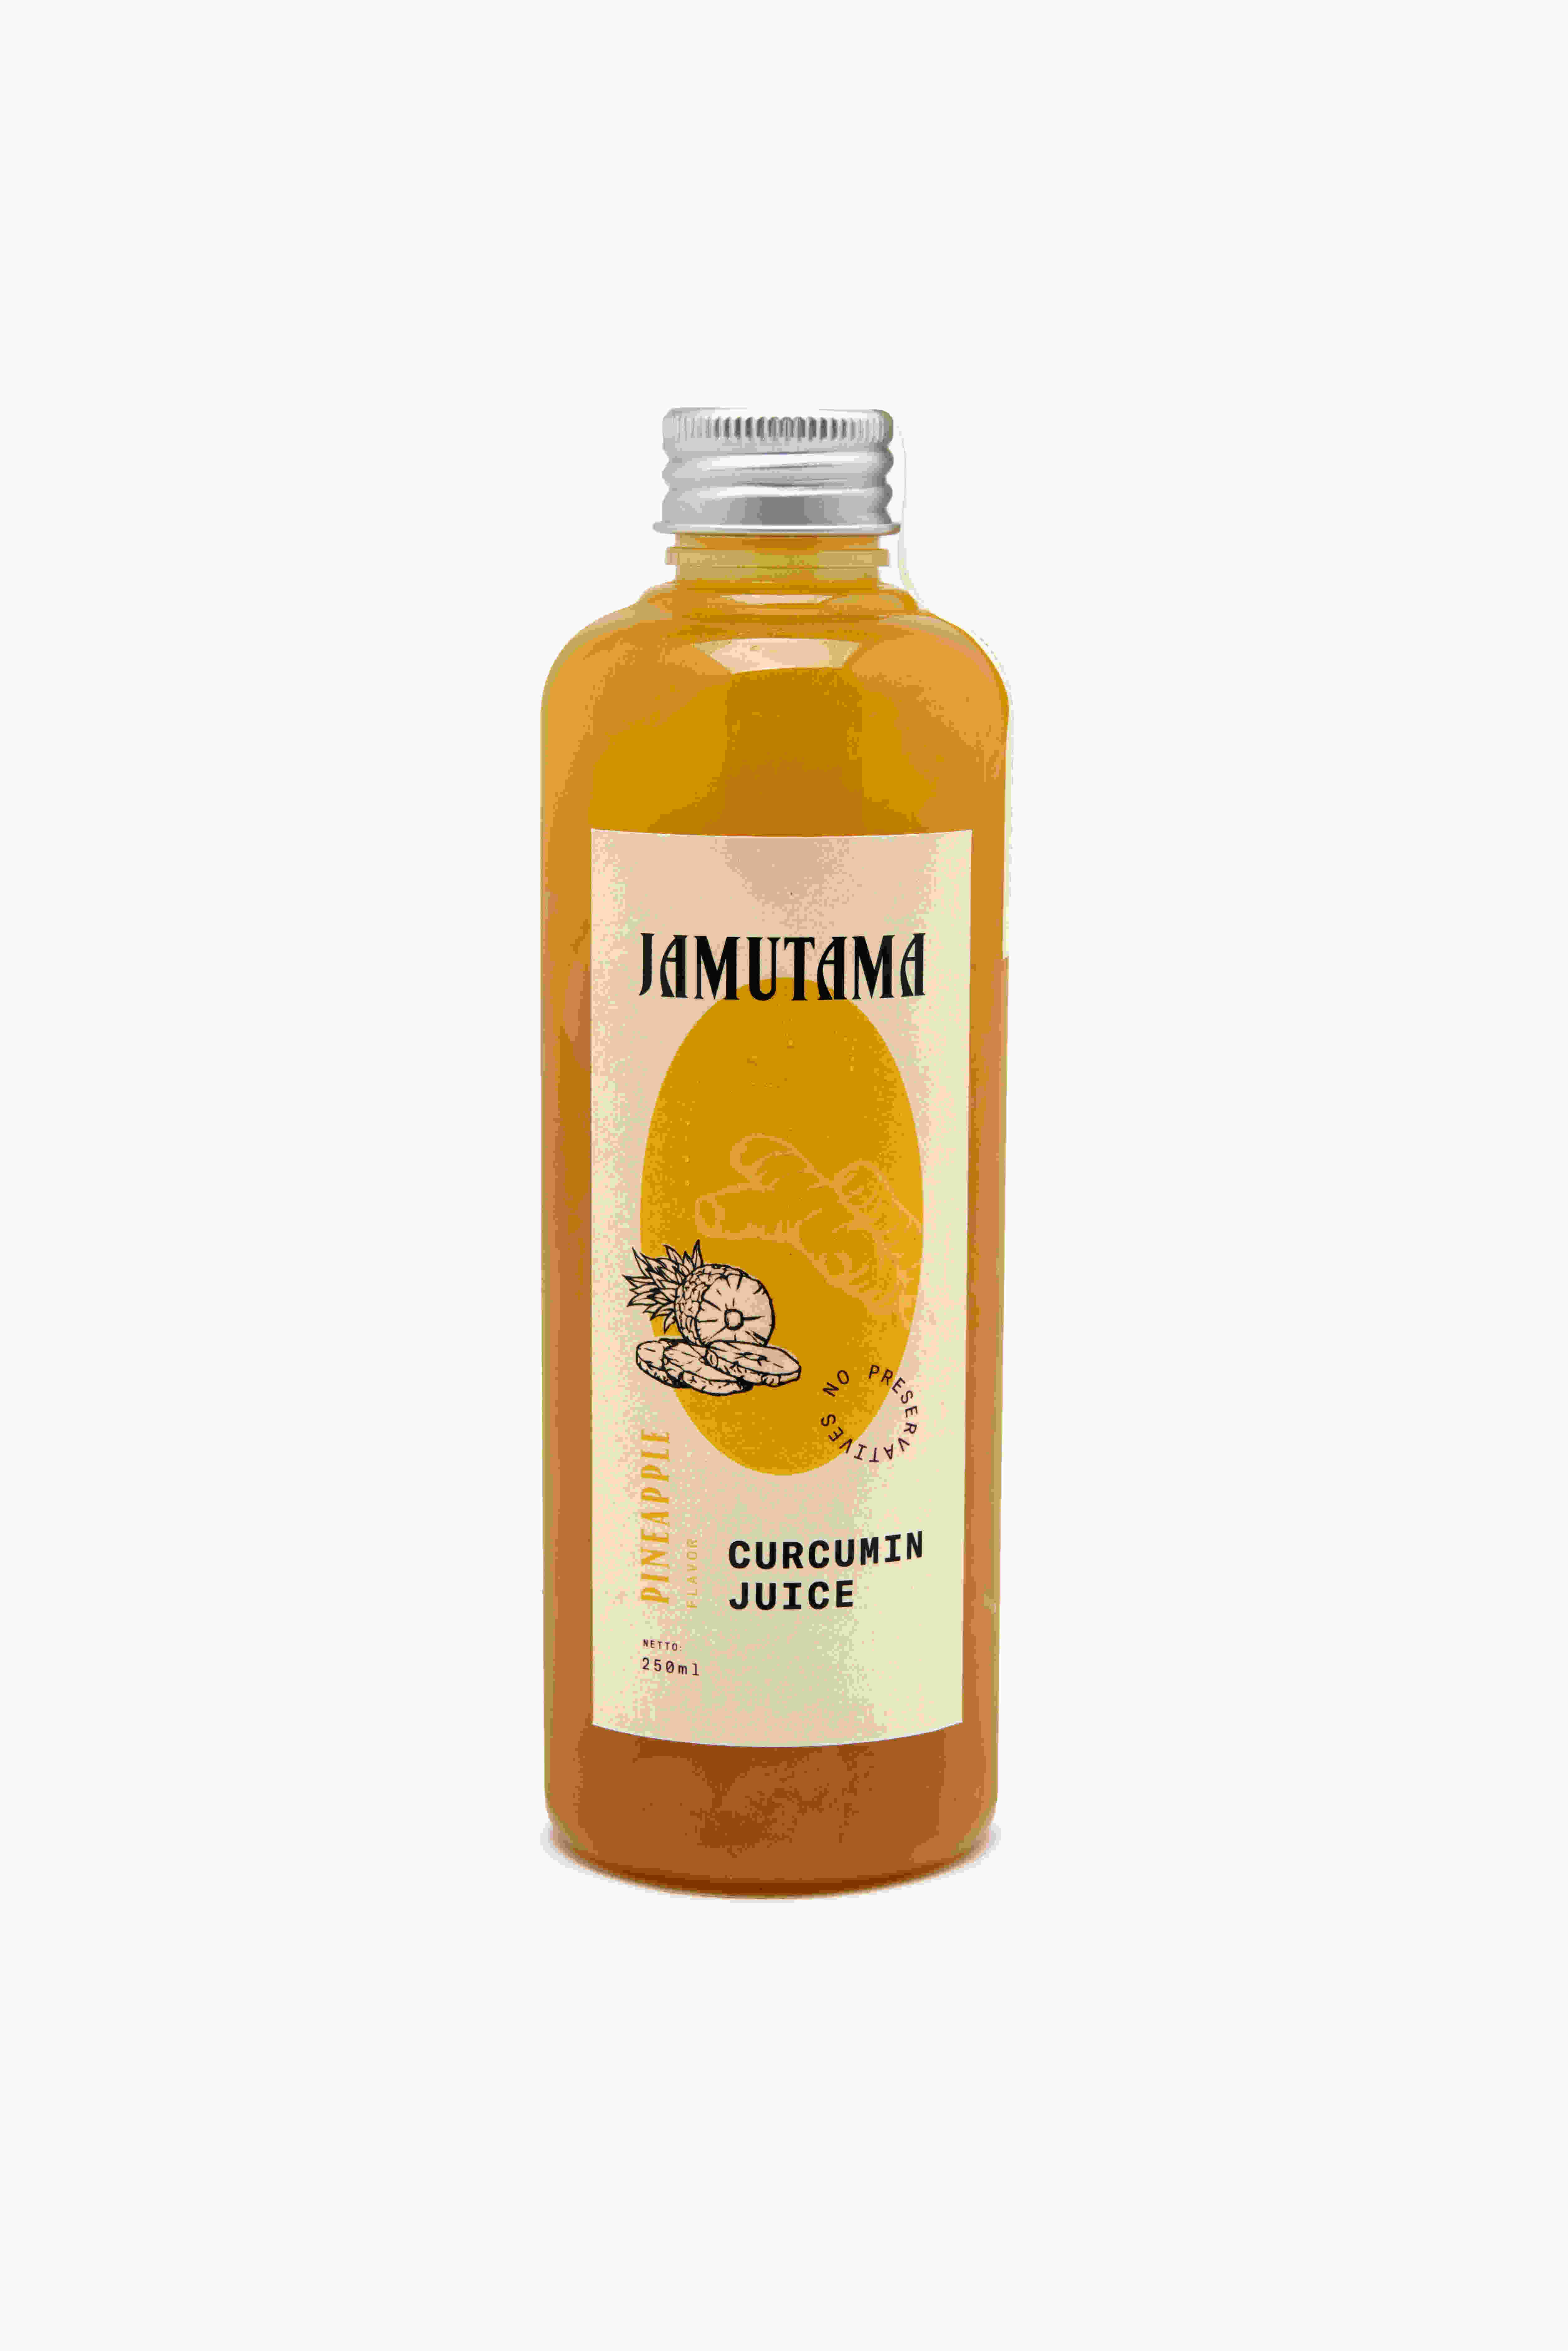 Jamutama Curcumin Juice Pineapple / Kunyit Nanas (250ml)